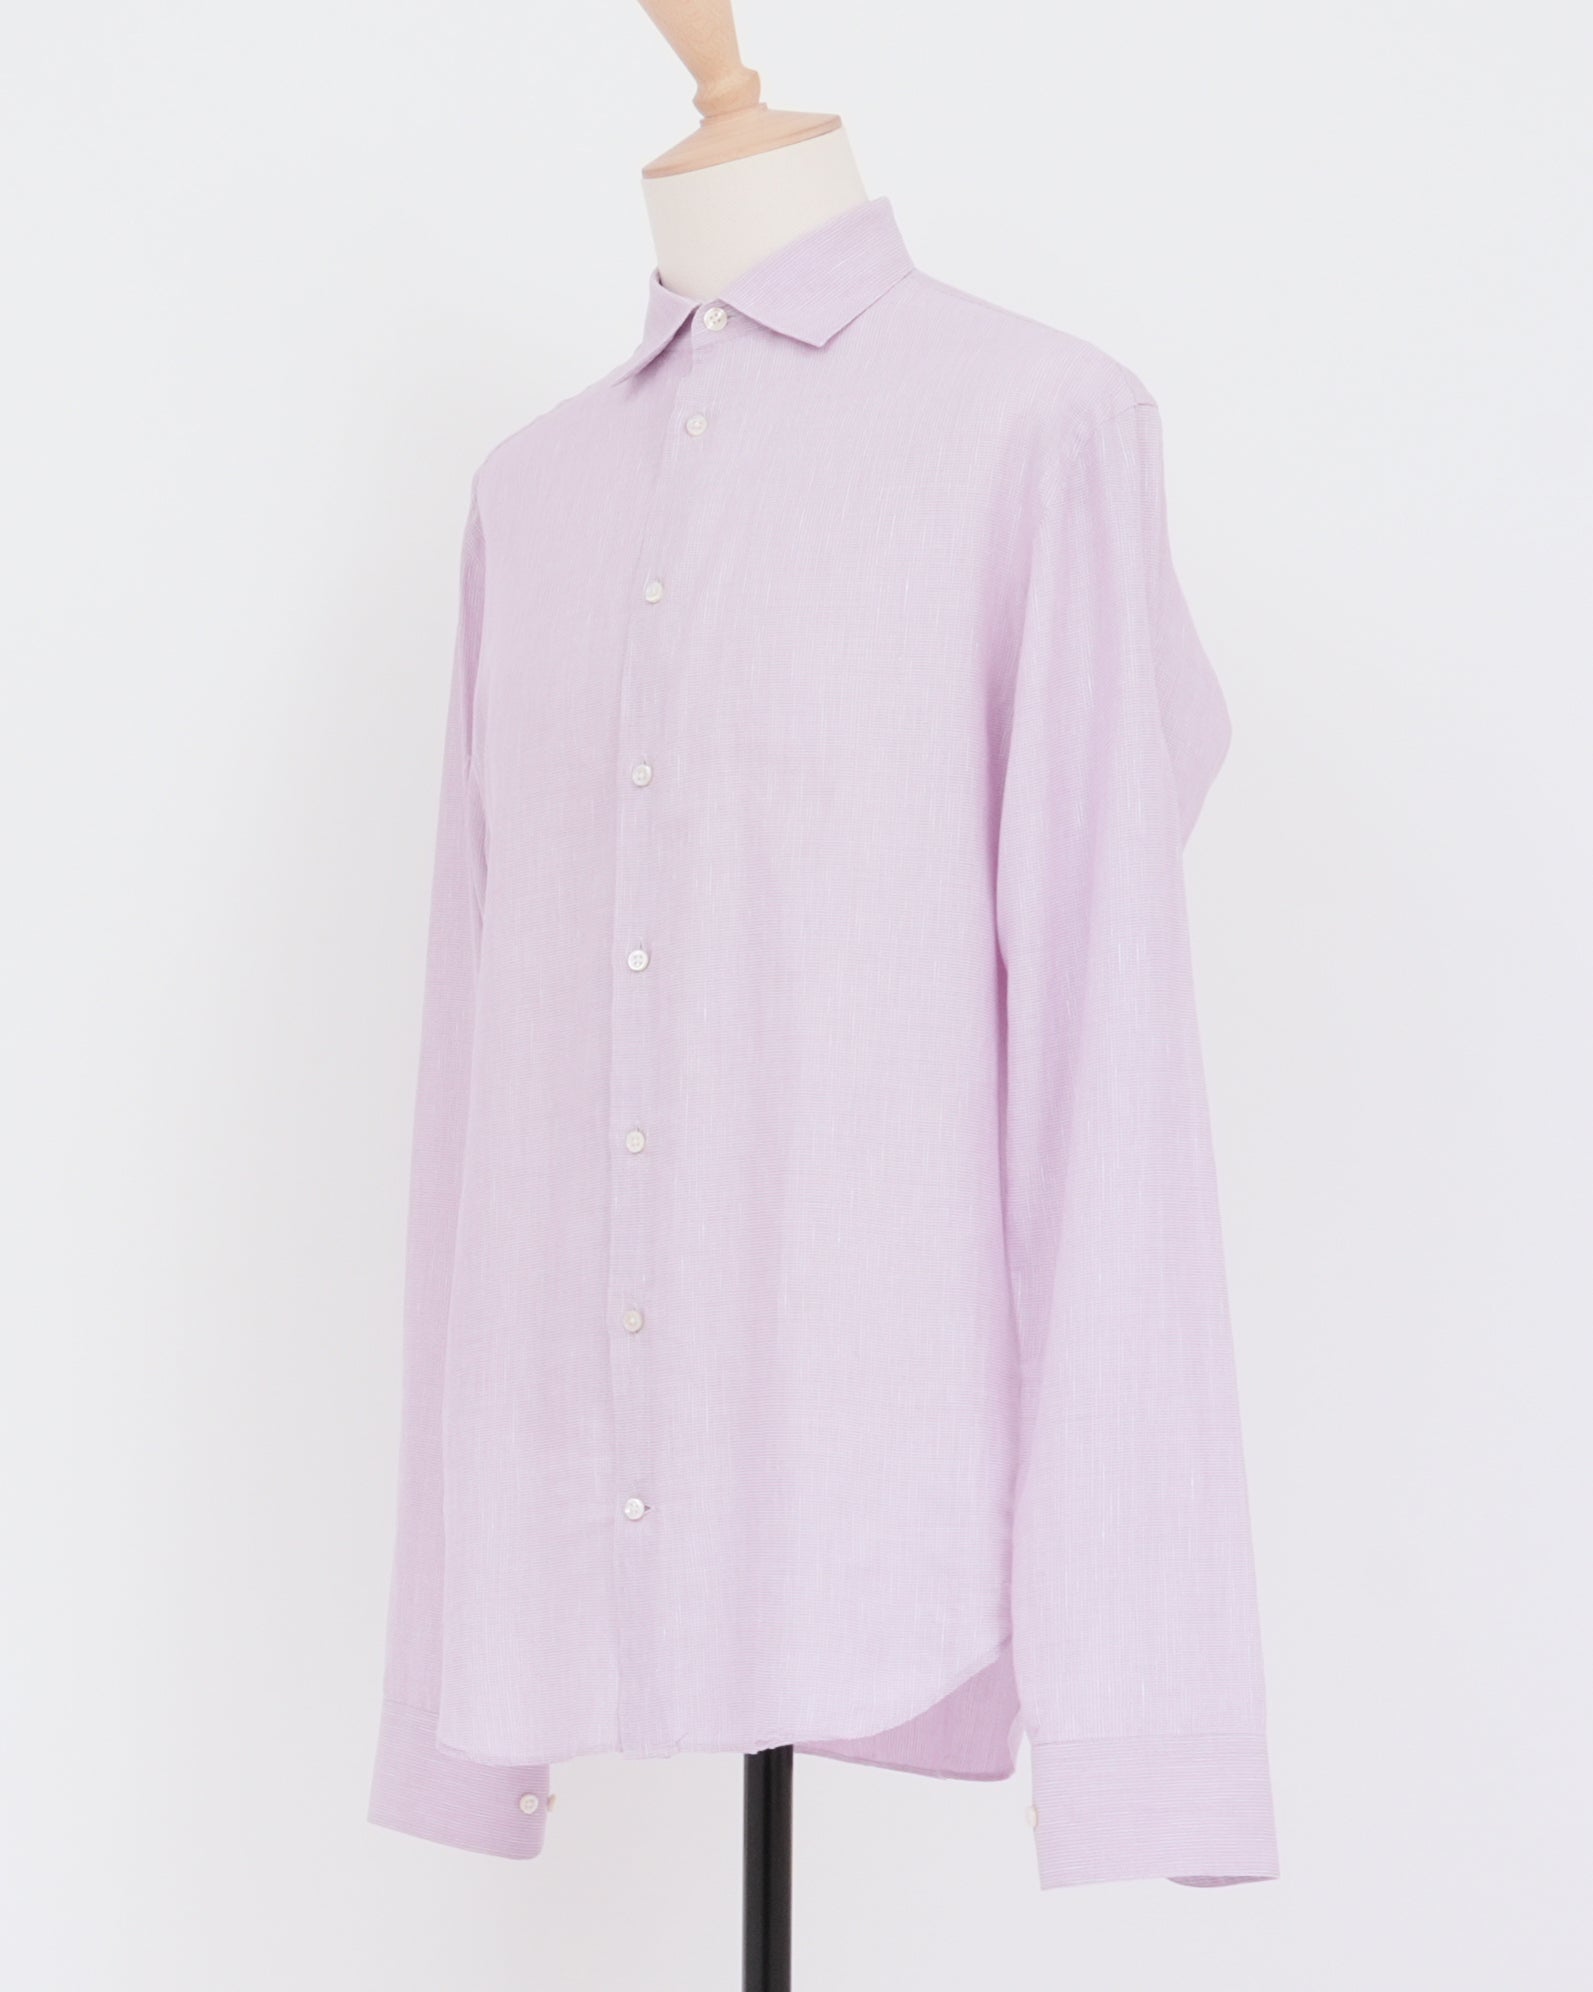 ARMANI Light Purple Dress Shirt